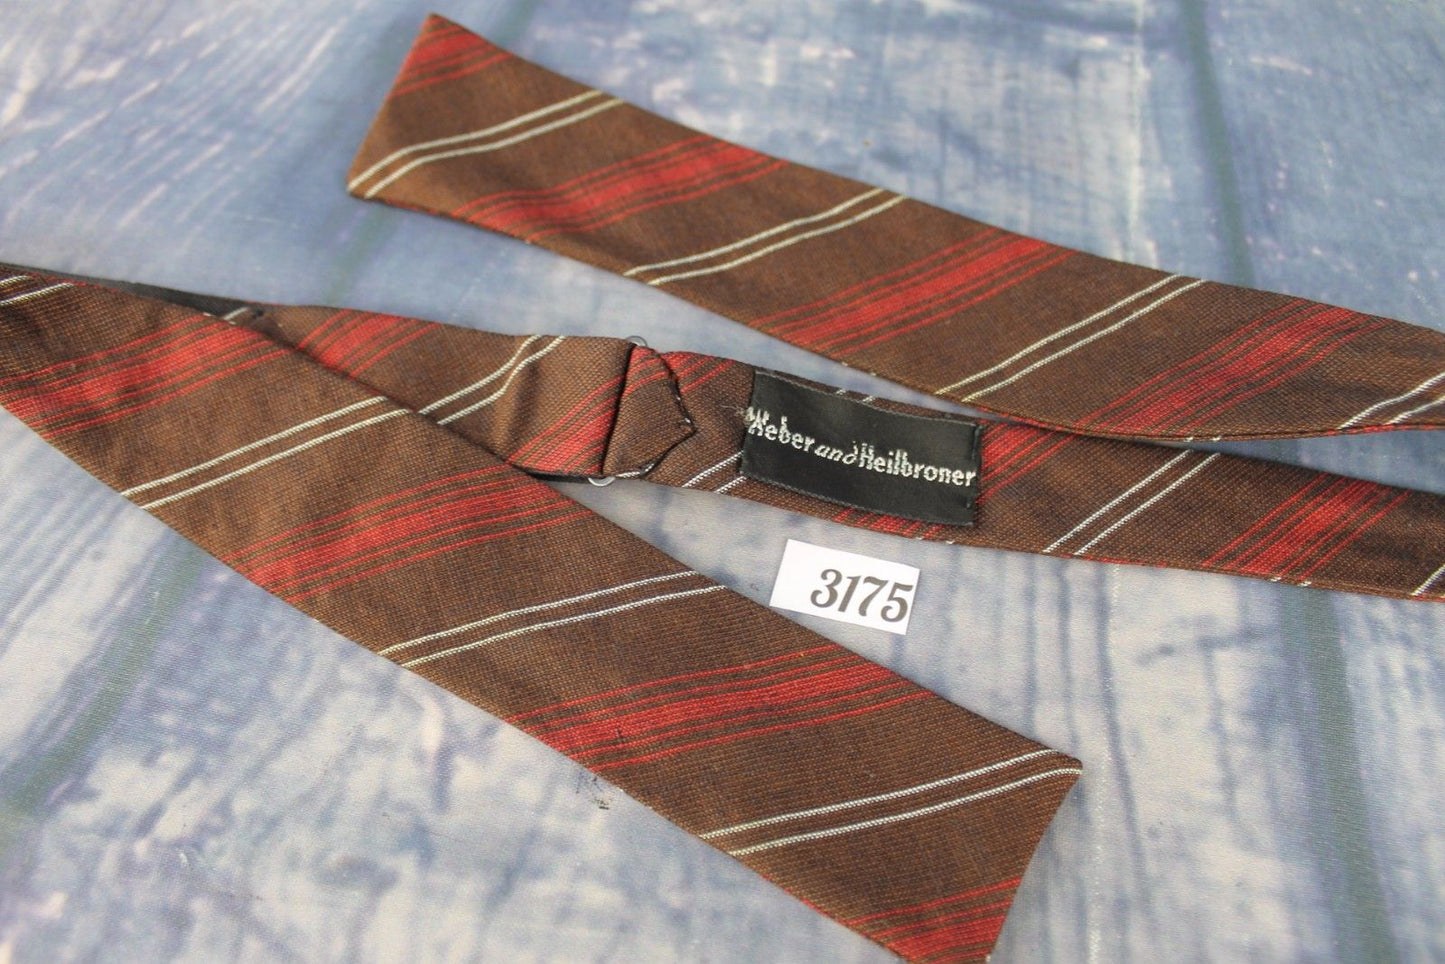 Vintage Weber & Heilbroner Self Tie Adjustable Straight End Skinny Bow Tie Brown Red Ivory Striped